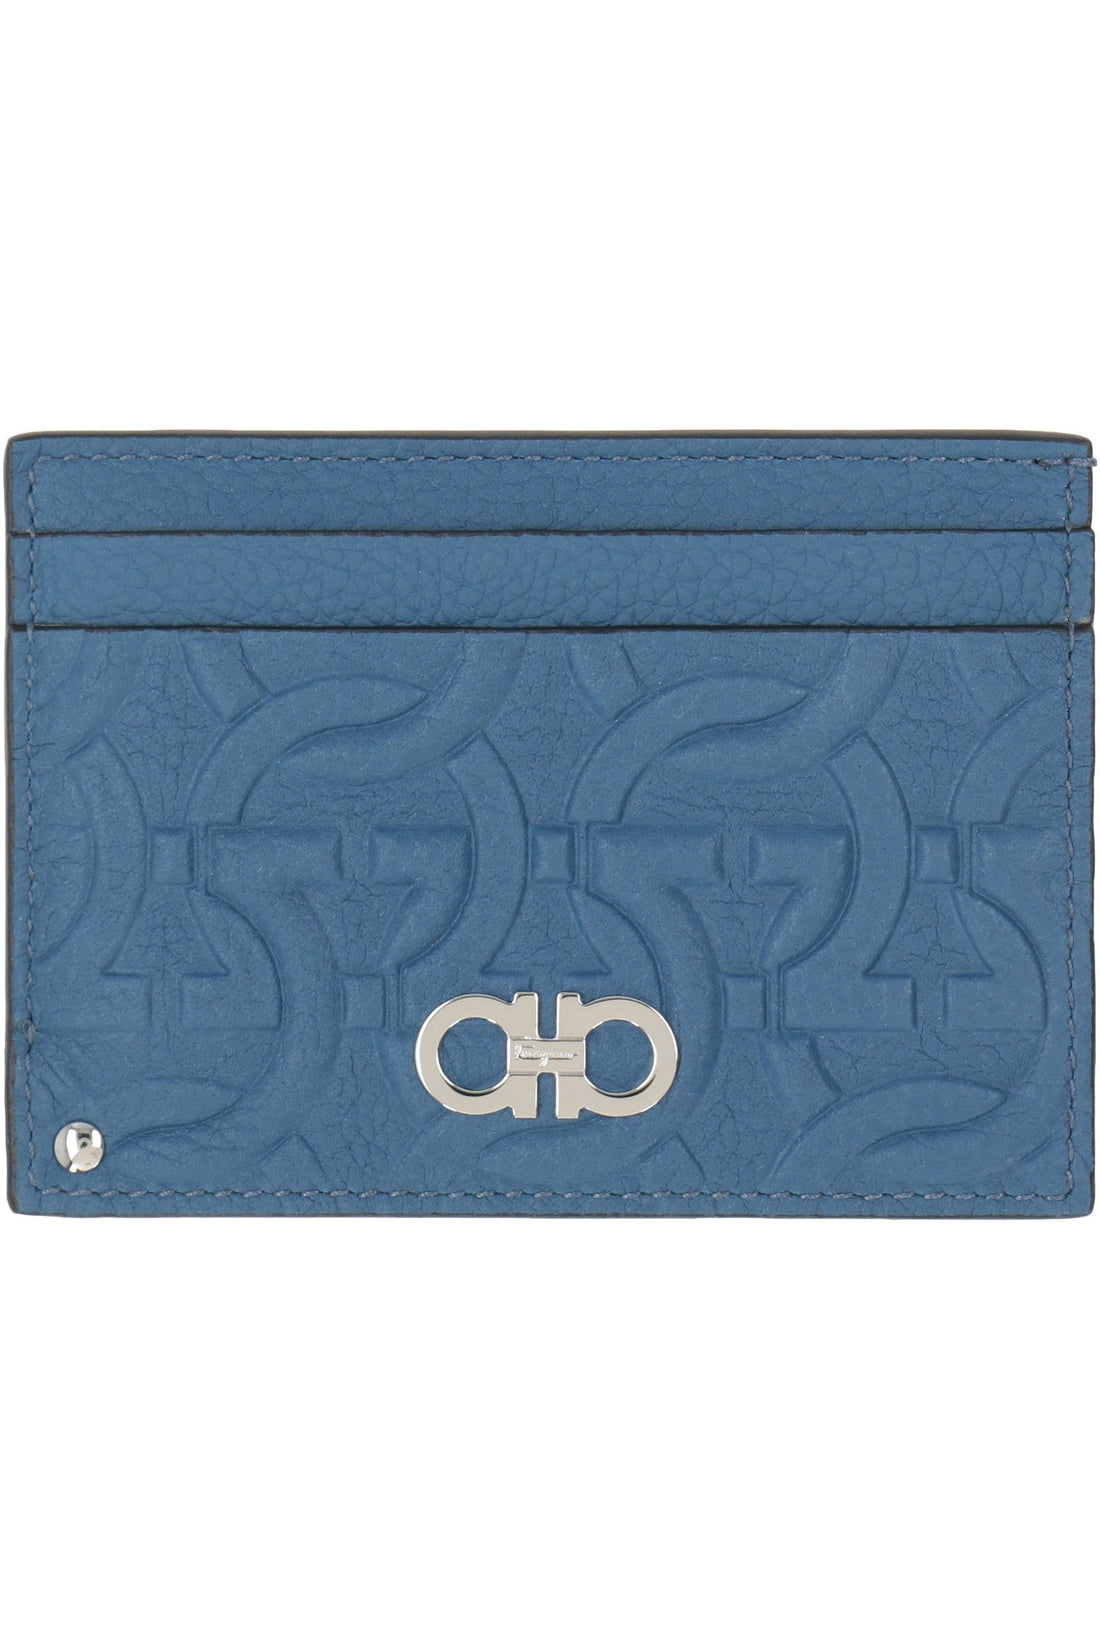 FERRAGAMO-OUTLET-SALE-Gancini Leather card holder-ARCHIVIST